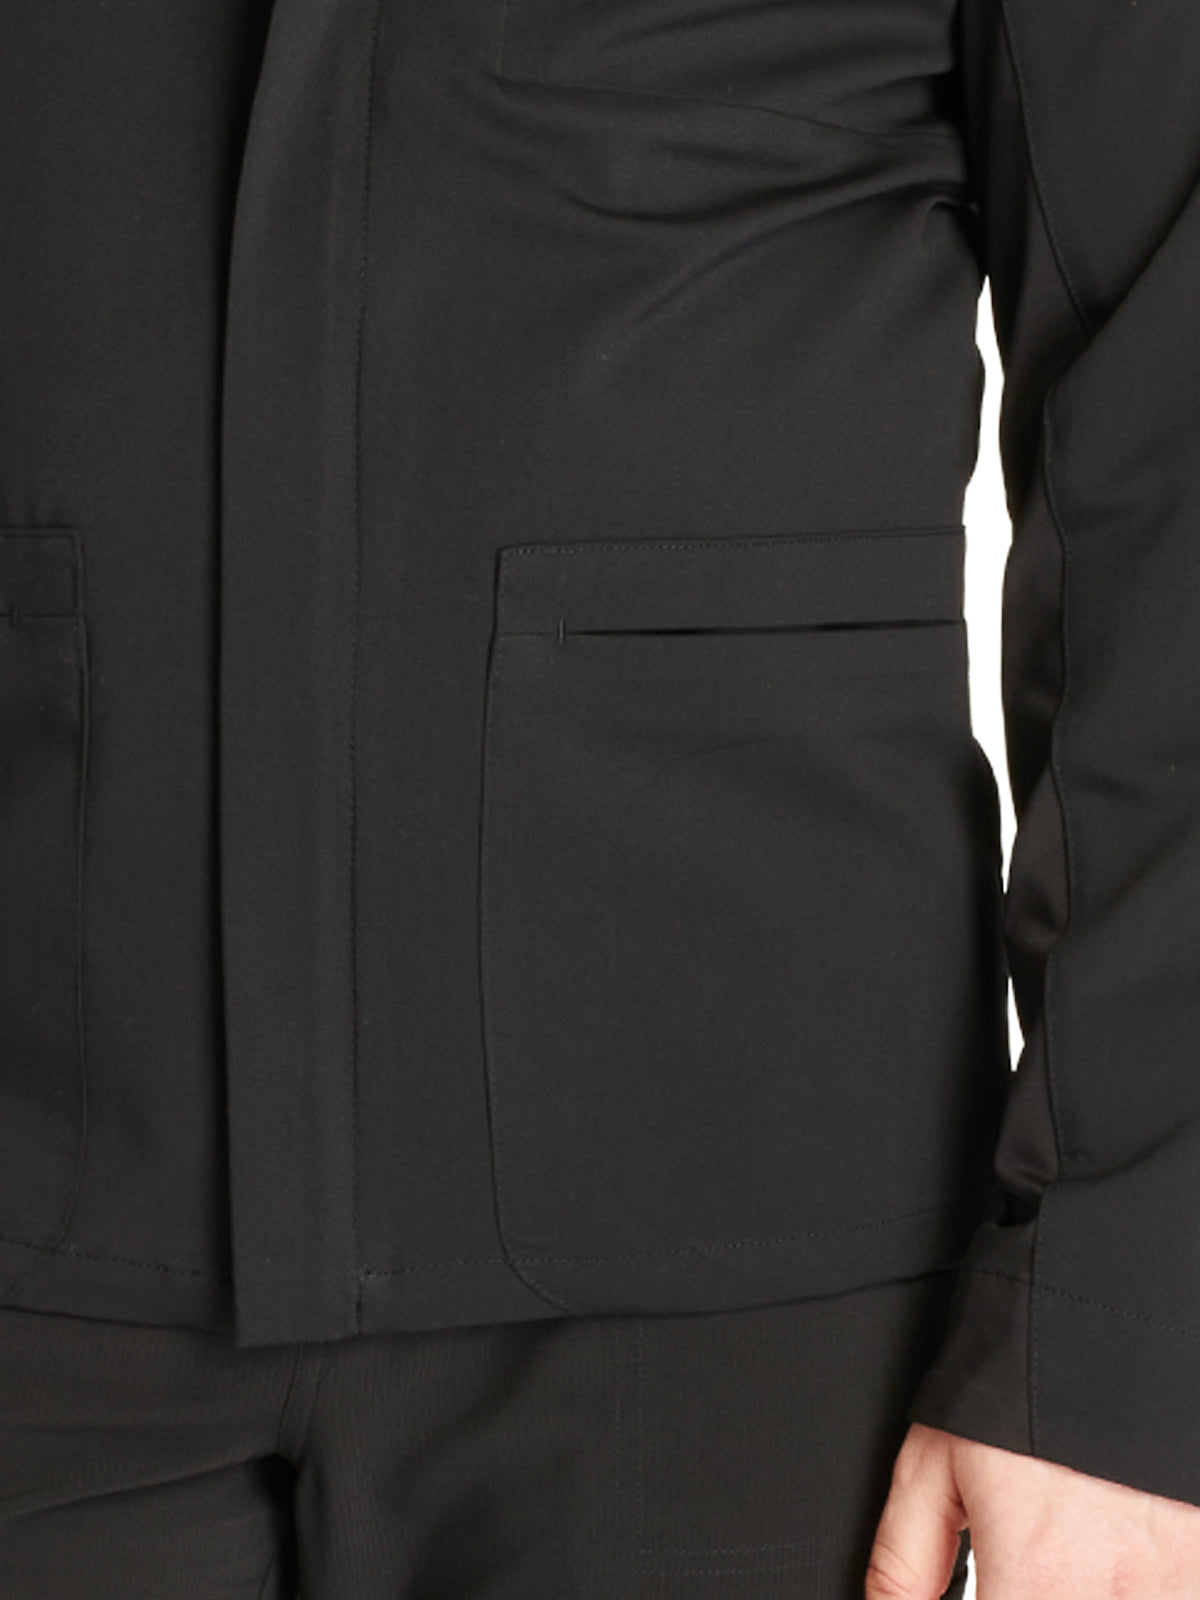 Men's Zip Front Scrub Jacket - CK329A - Black